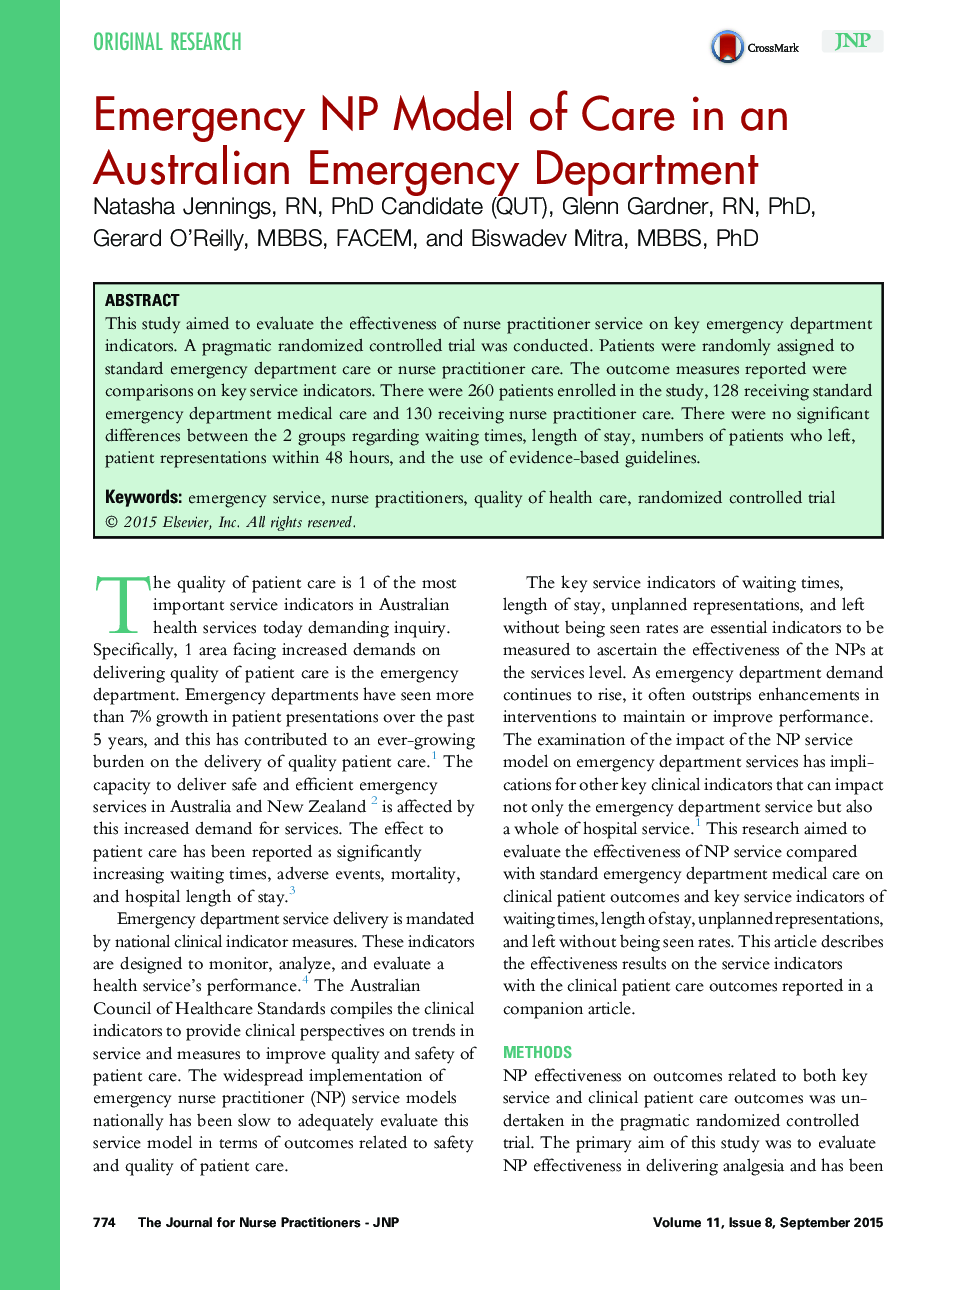 مدل NP اورژانسی مراقبت در بخش اورژانس استرالیا